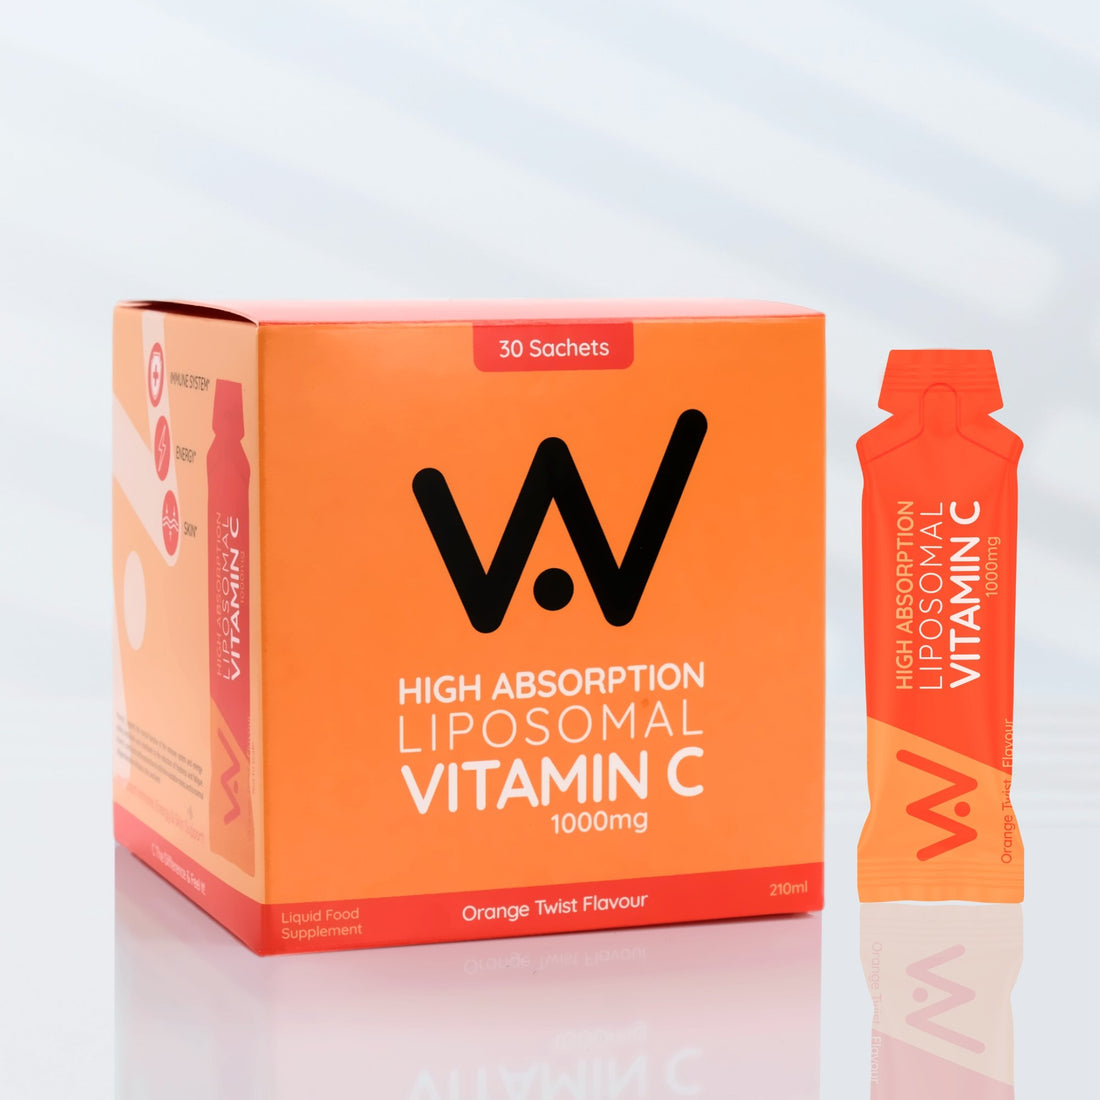 NEW Liposomal Vitamin C Liquid - 1000mg - 30 Sachet Pack - Orange Twist Flavour